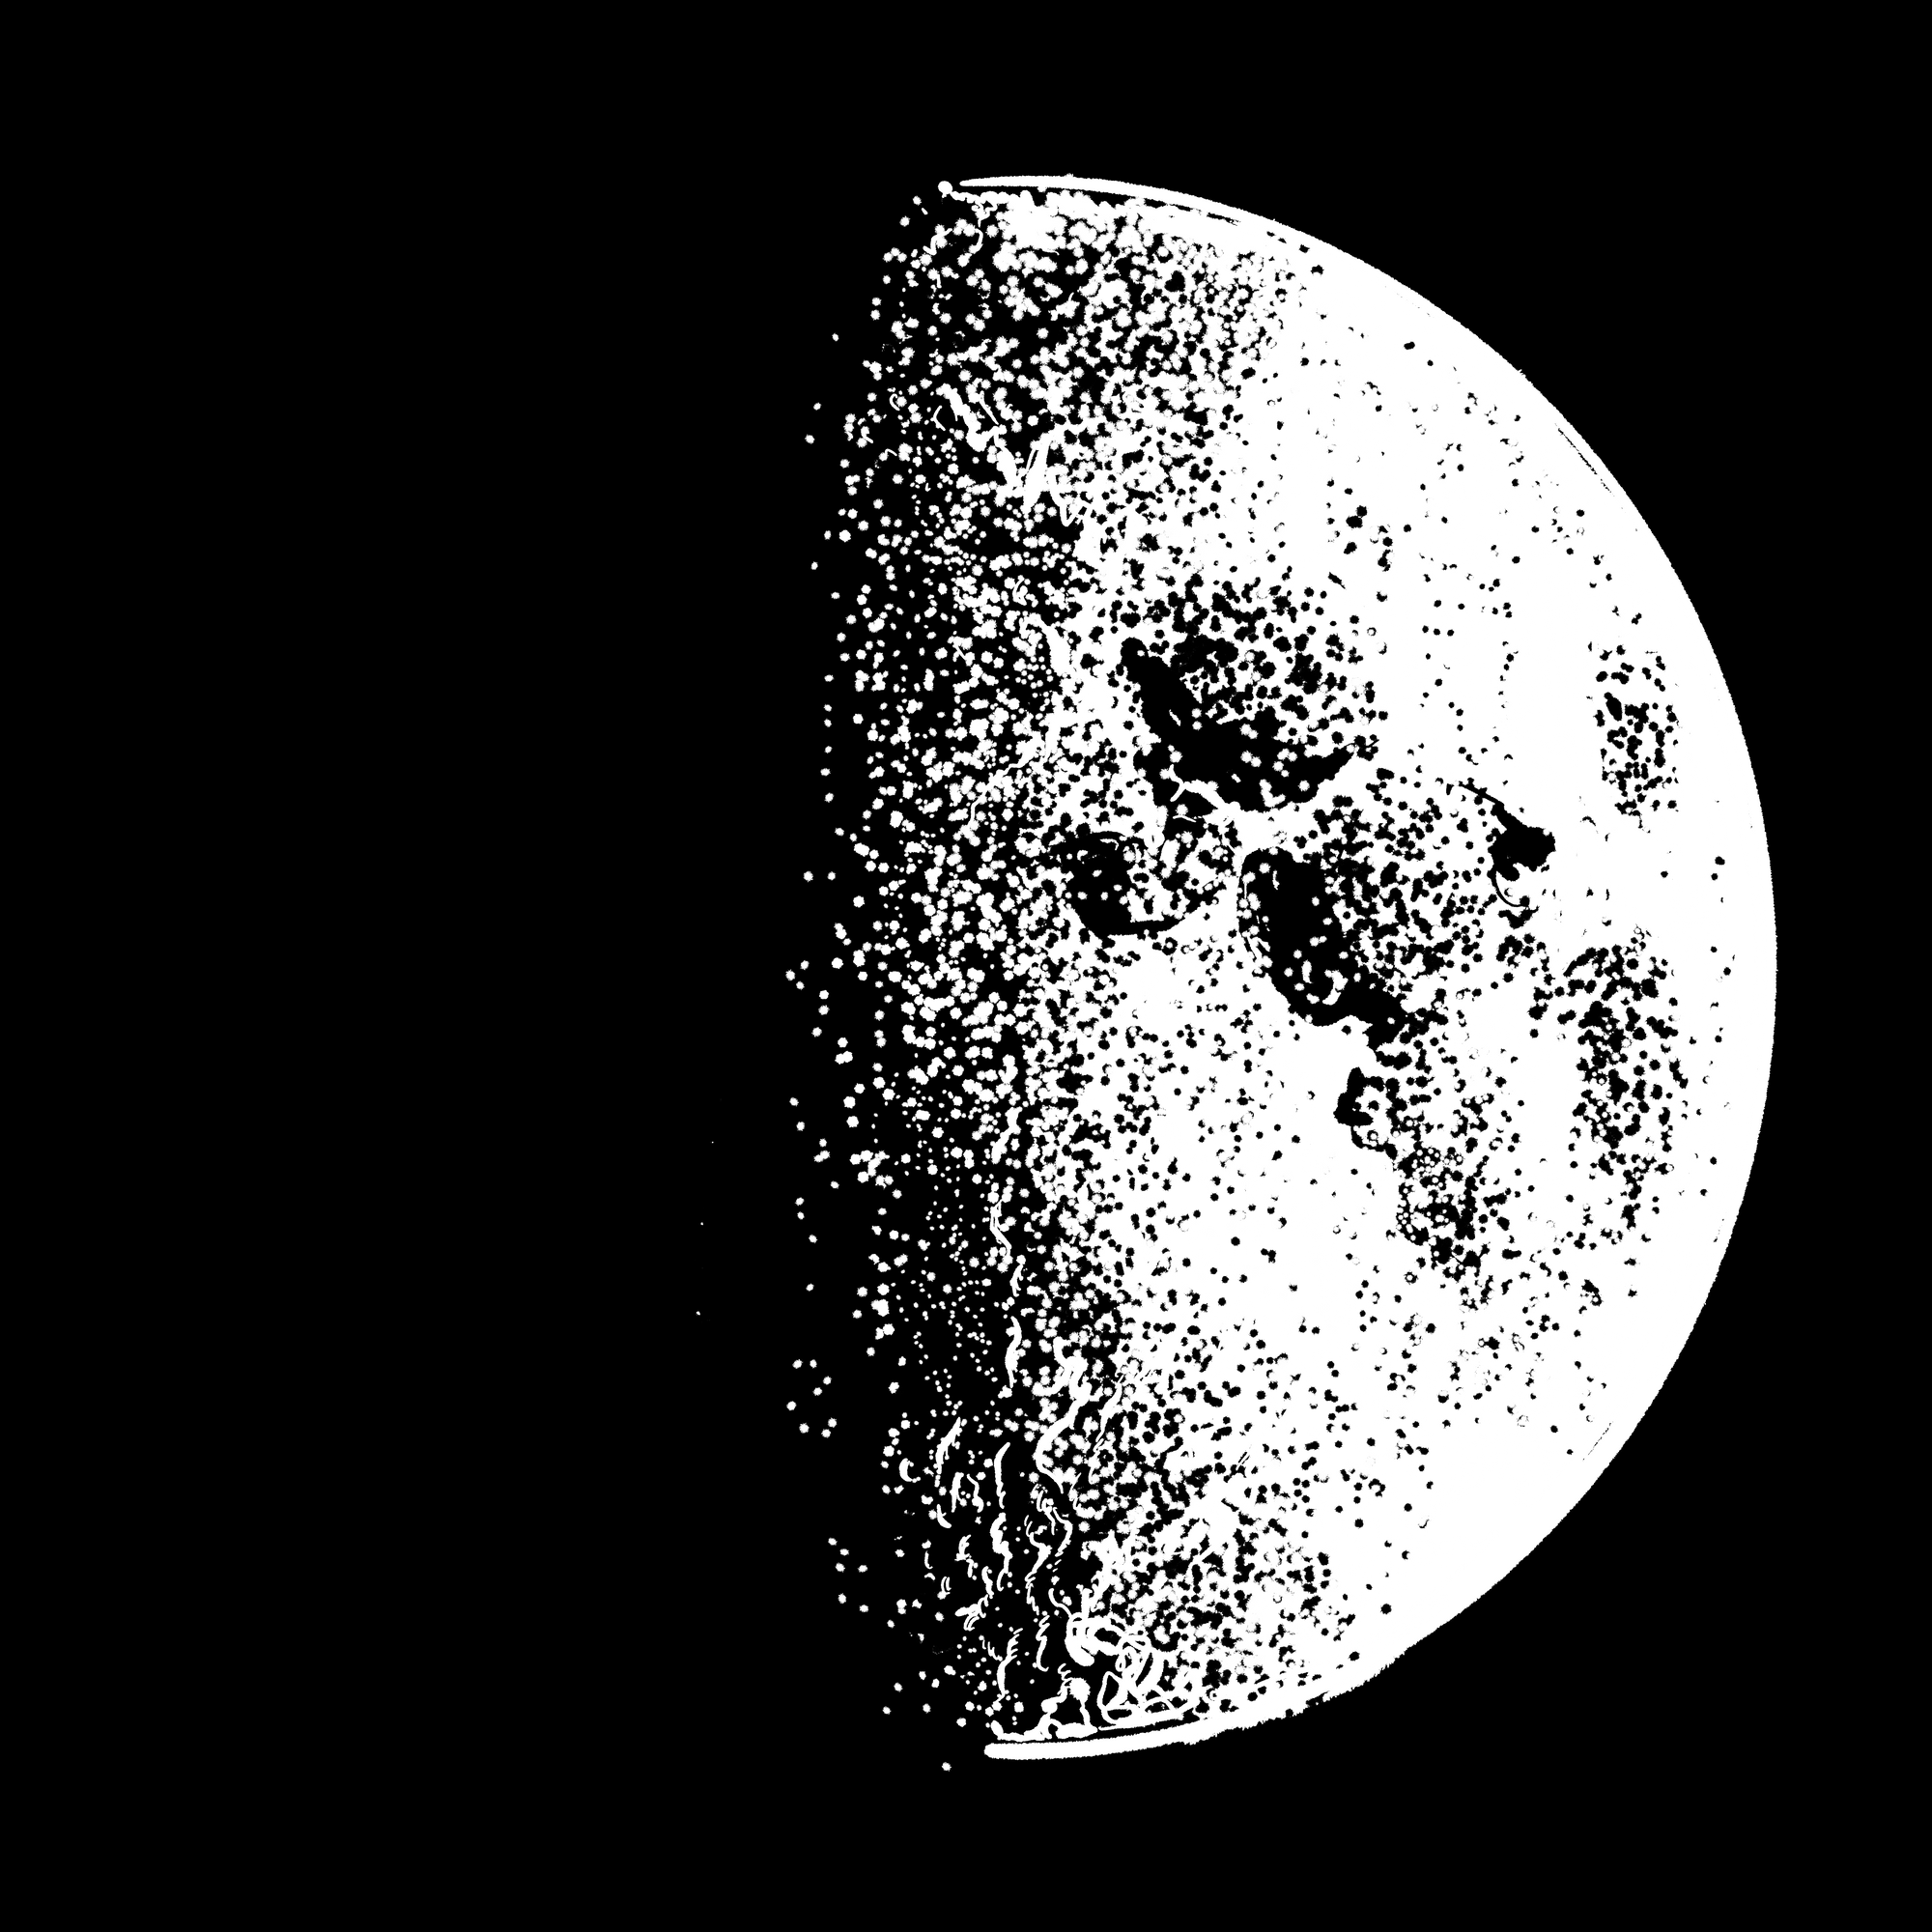 A quarter moon in a black sky